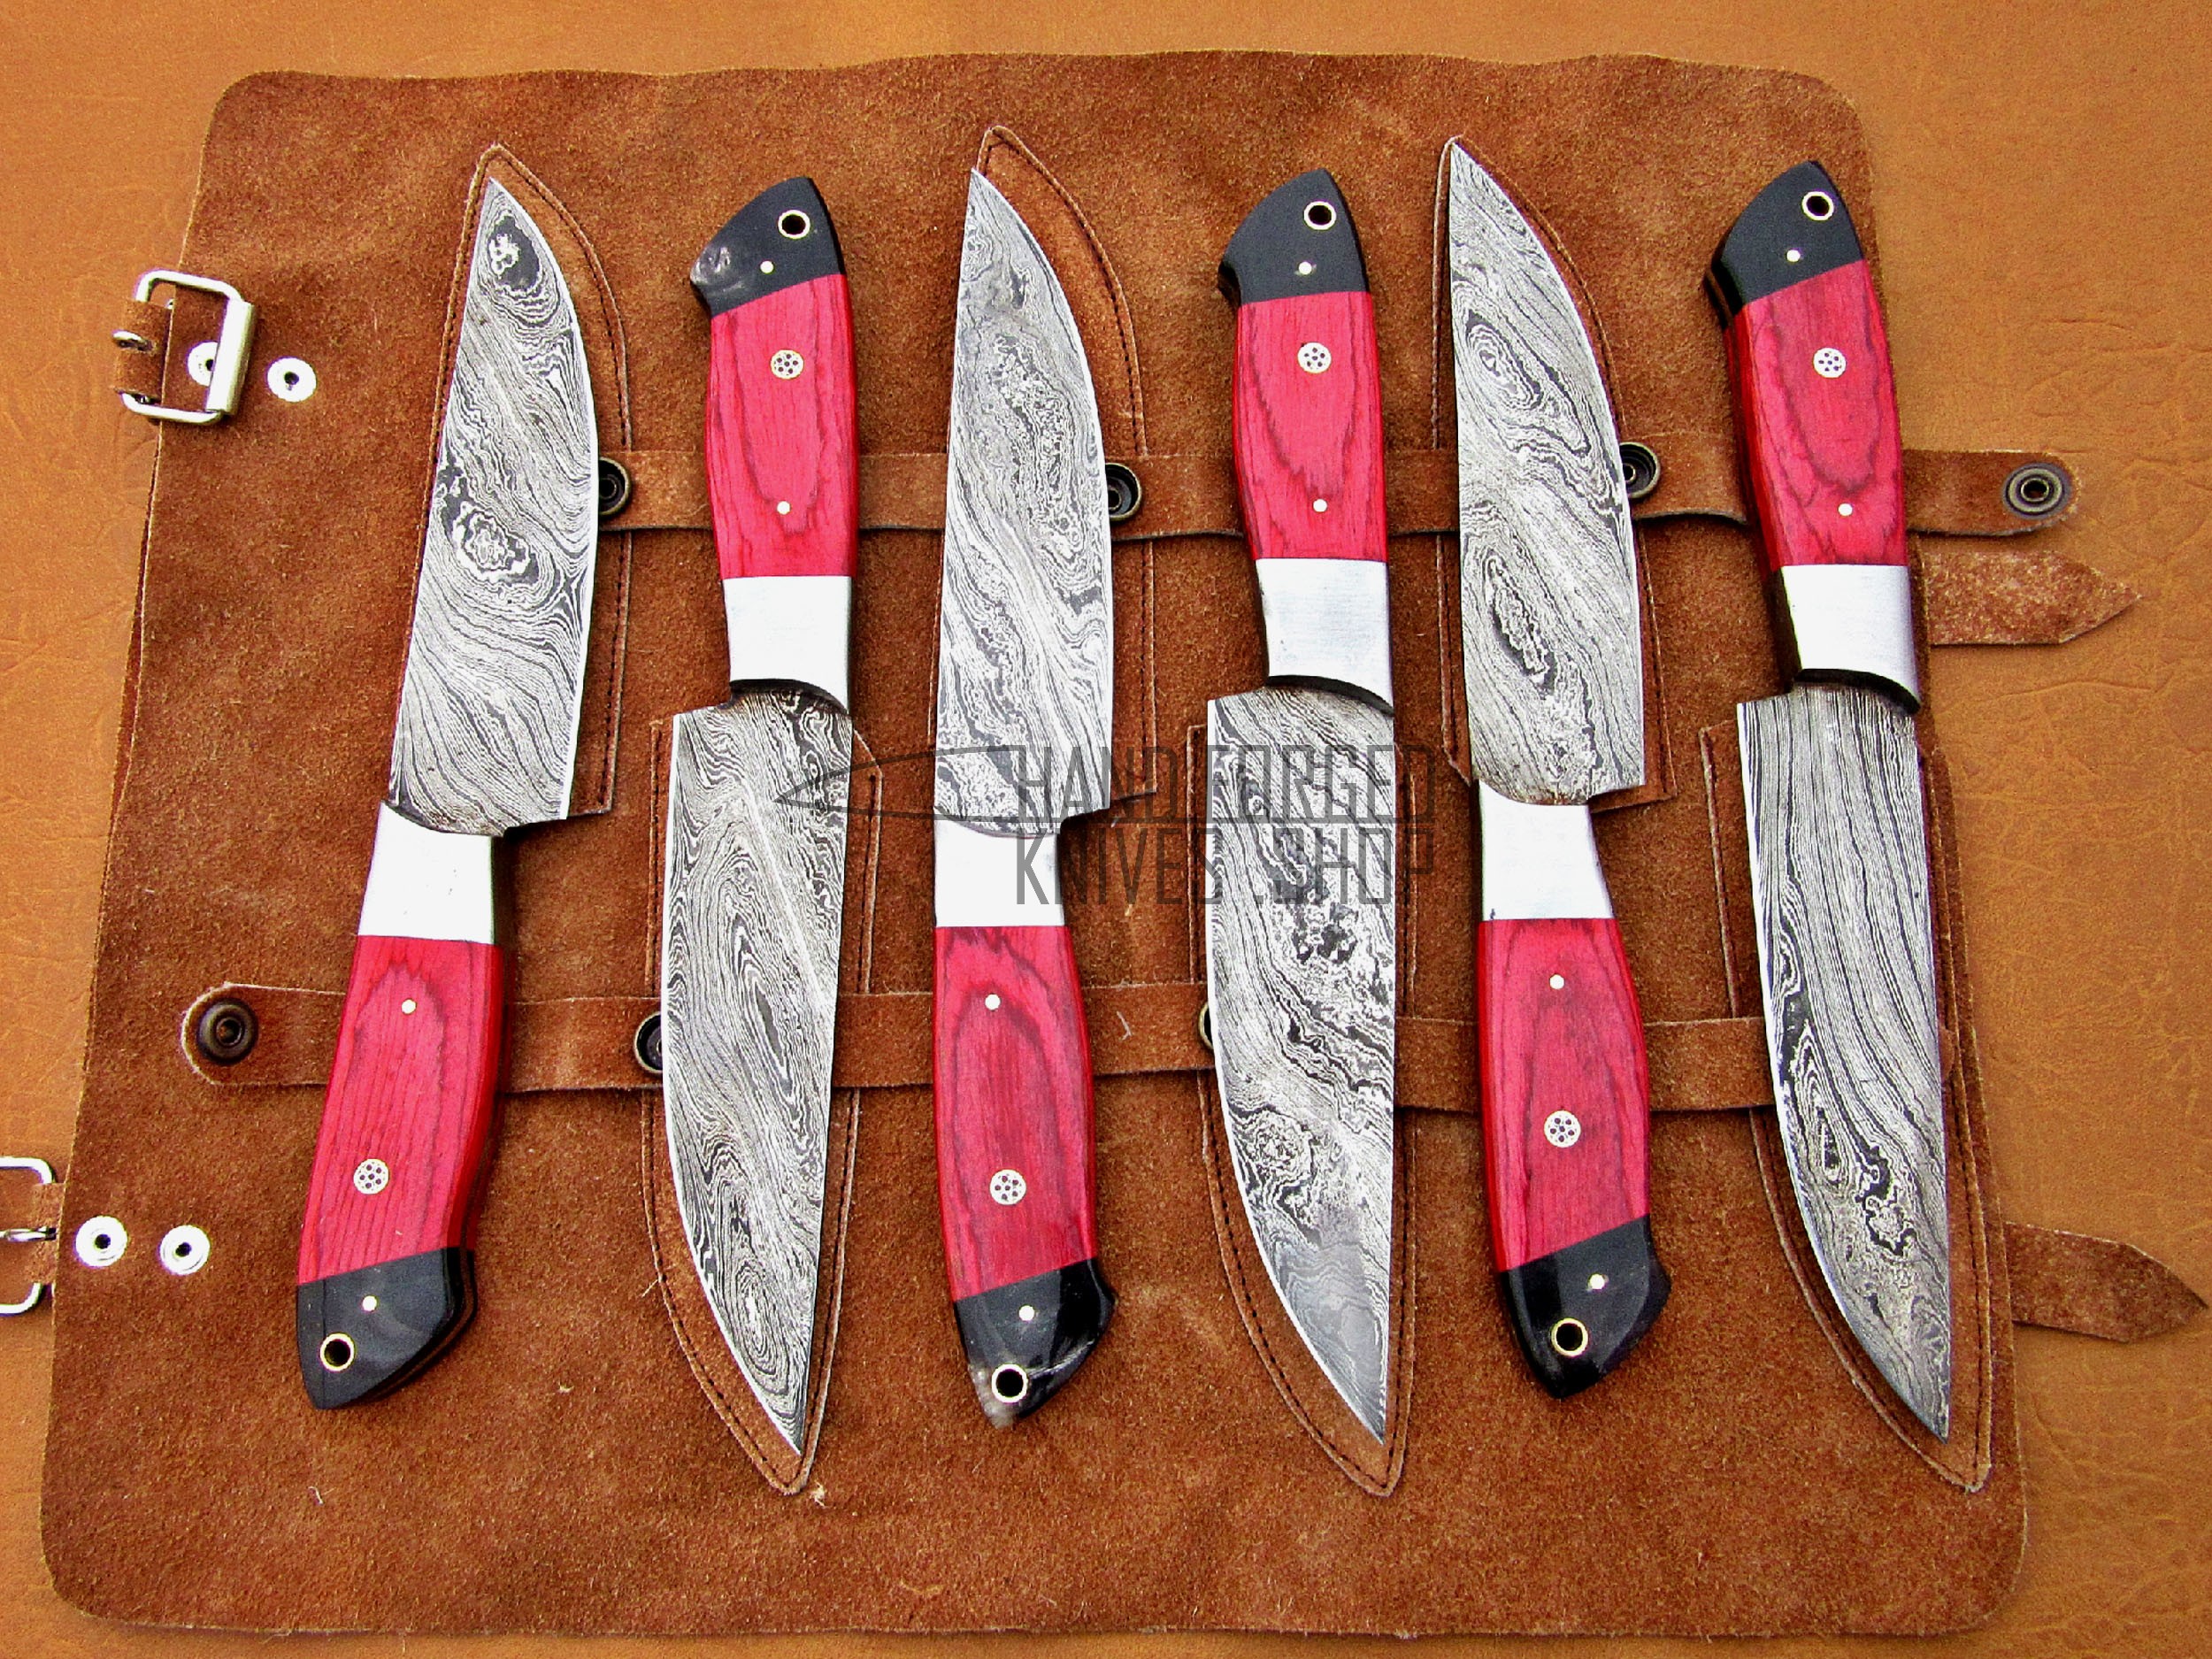 Fixed Blade Custom Handmade Damascus steel Knife with Macarta Sheet Handle  - Damascus Outlet